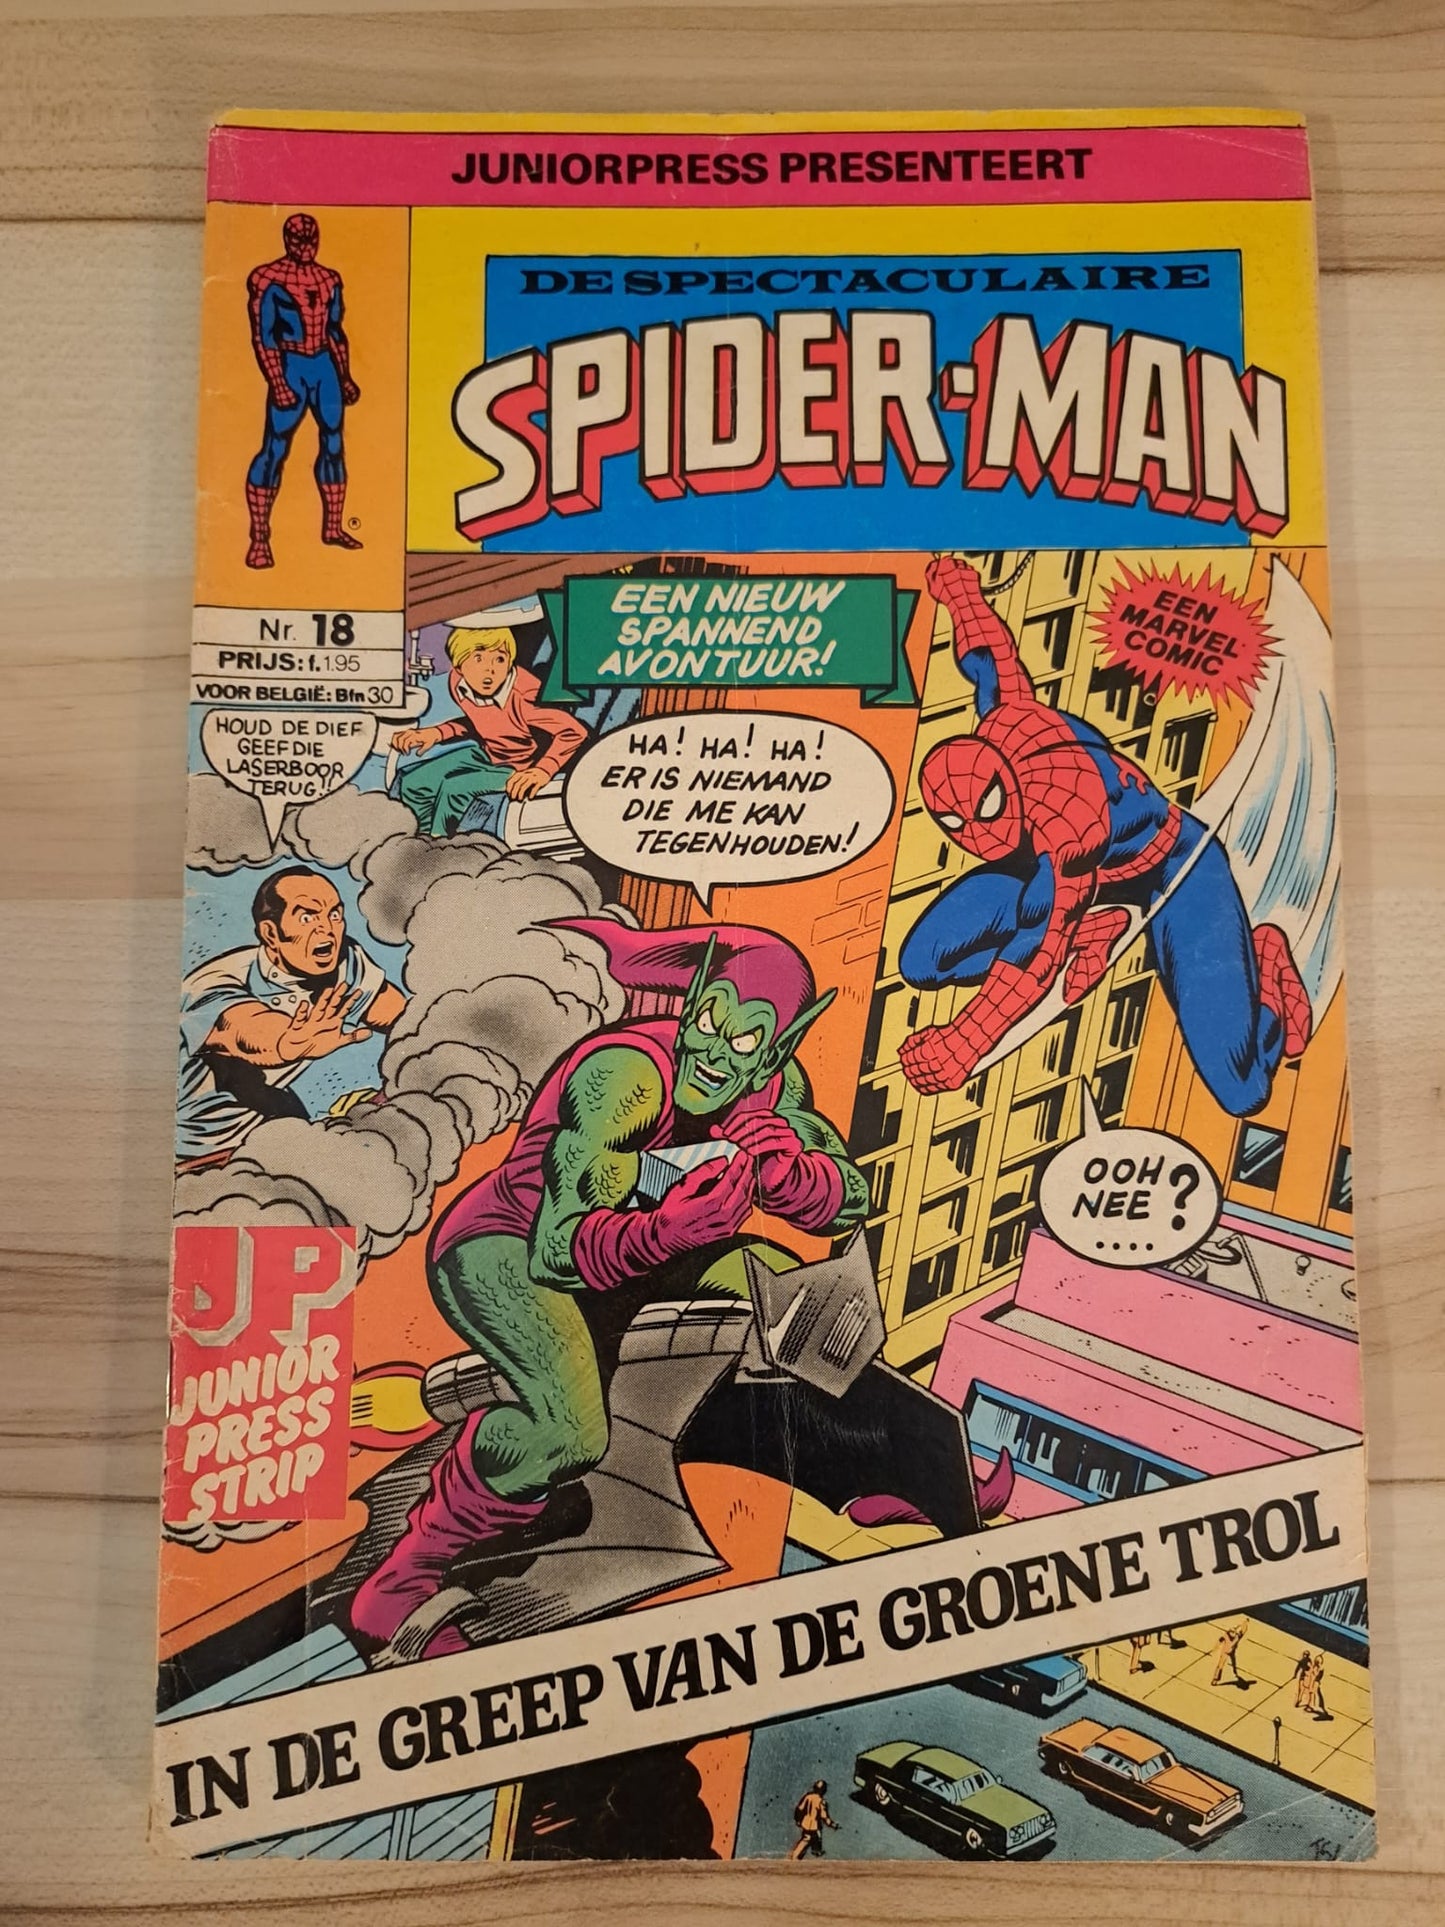 De spektakulaire spiderman #18